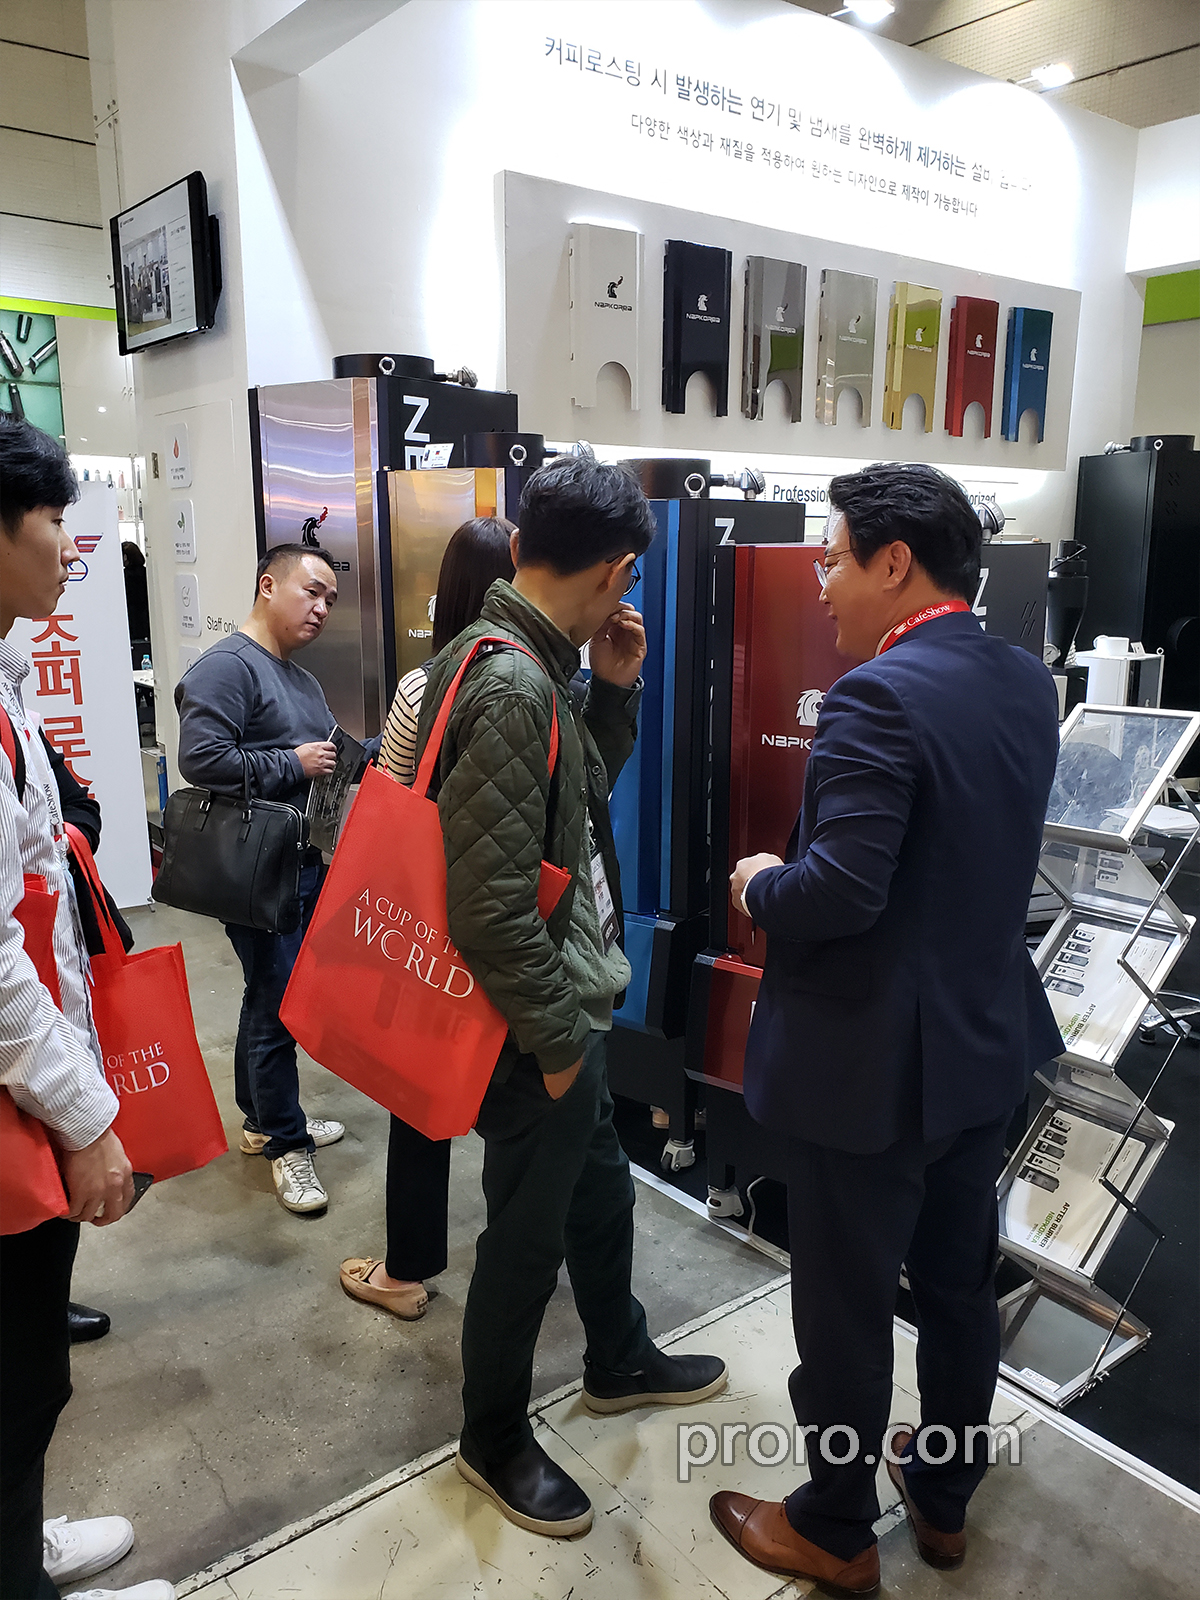 CAFE SHOW SEOUL 2019 韩国站，NBPKOREA消烟消味机参展回顾